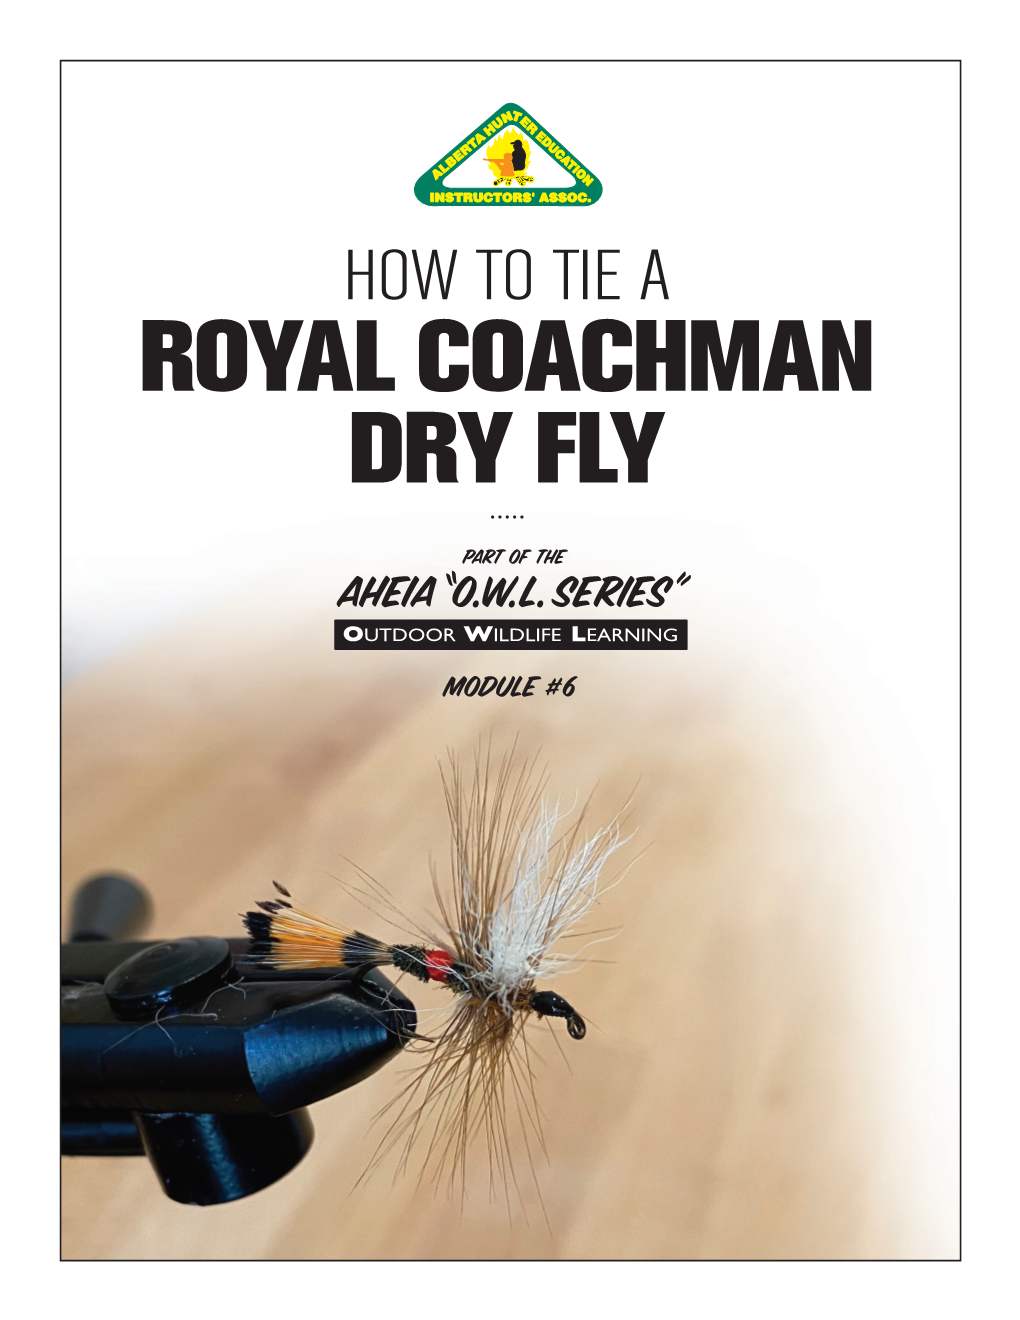 Royal Coachman Dry Fly